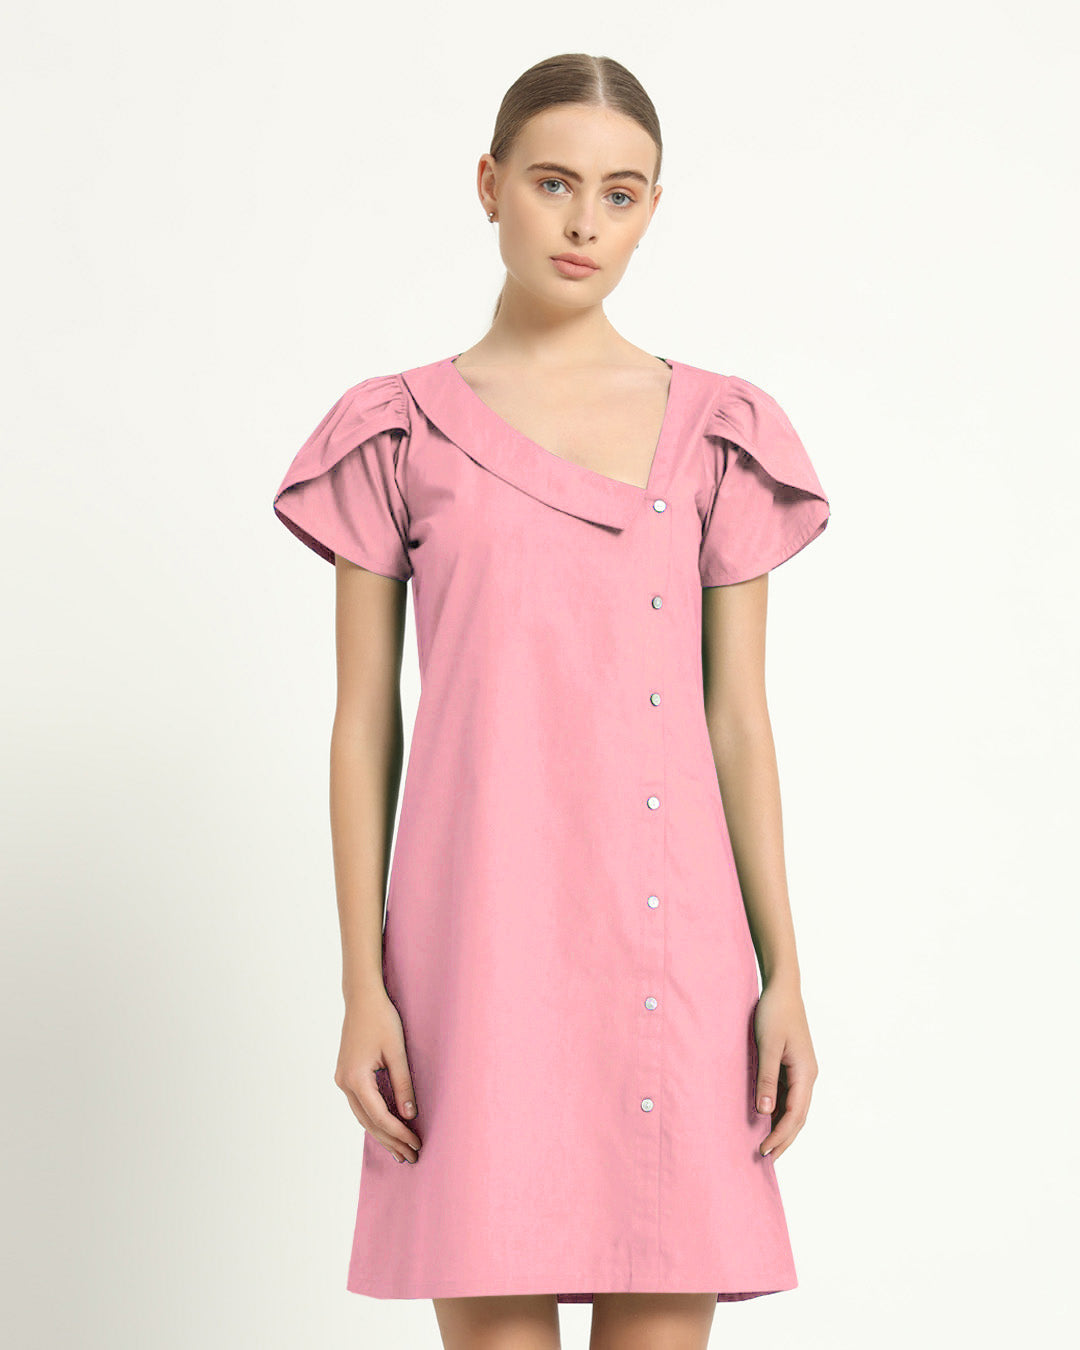 The Krensdorf Fondant Pink Cotton Dress